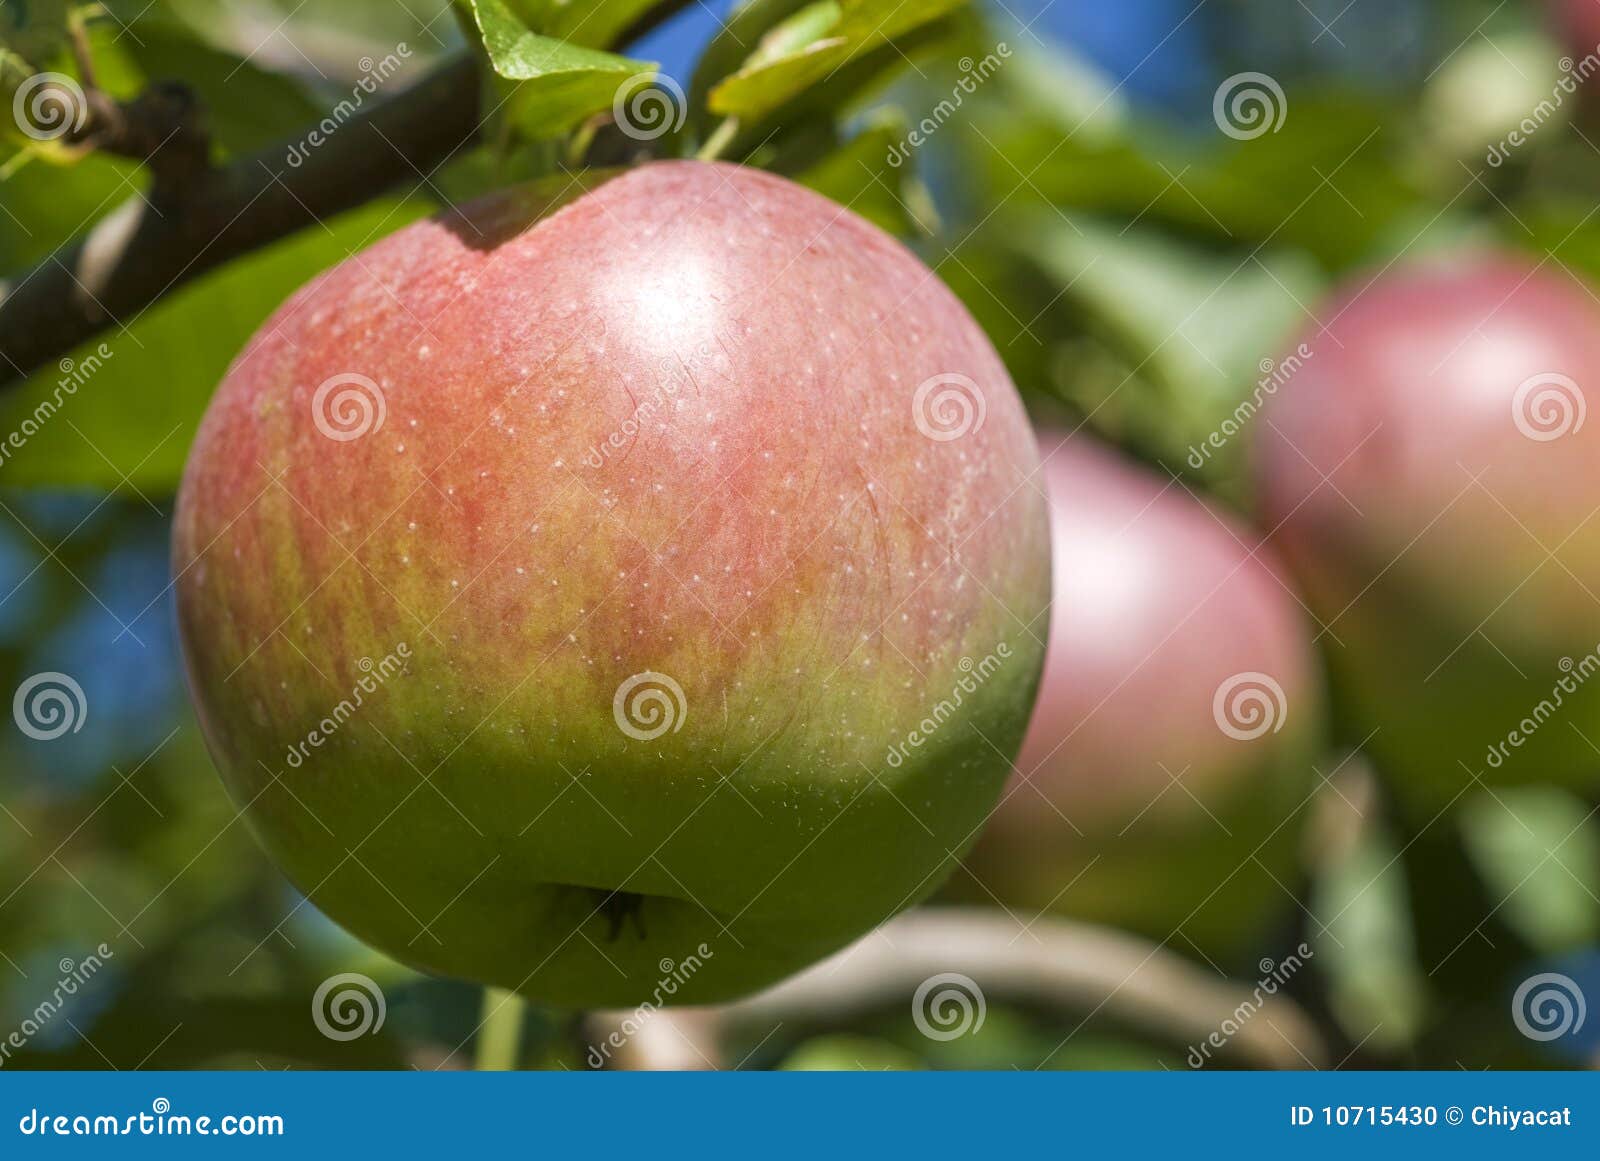 macintosh apple orchard